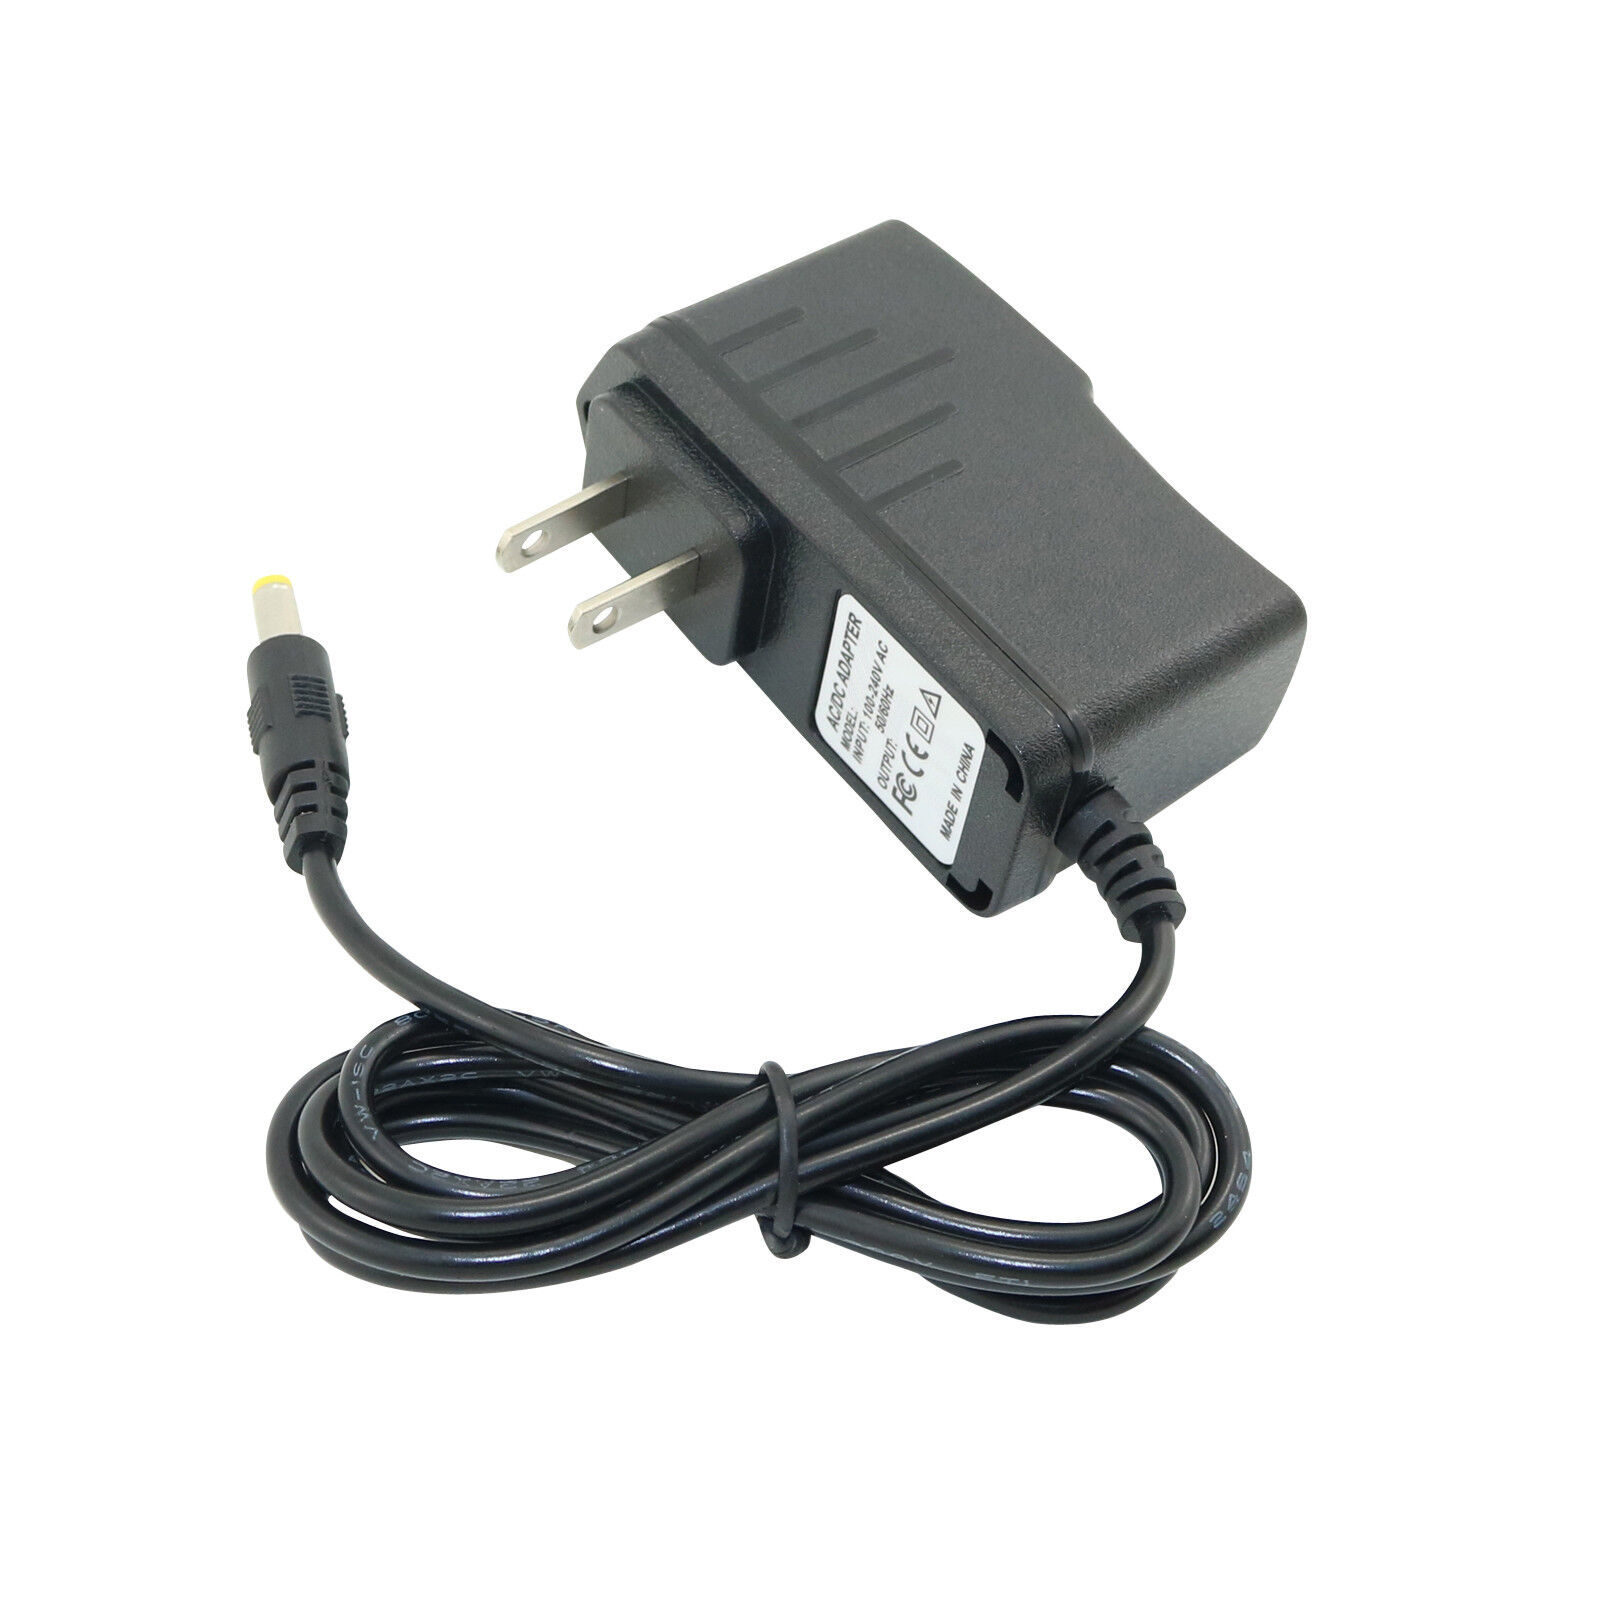 AC Adapter Charger For Motorola MBP41 MBP41BU MBP41PU Digital Video Baby Monitor - $18.99